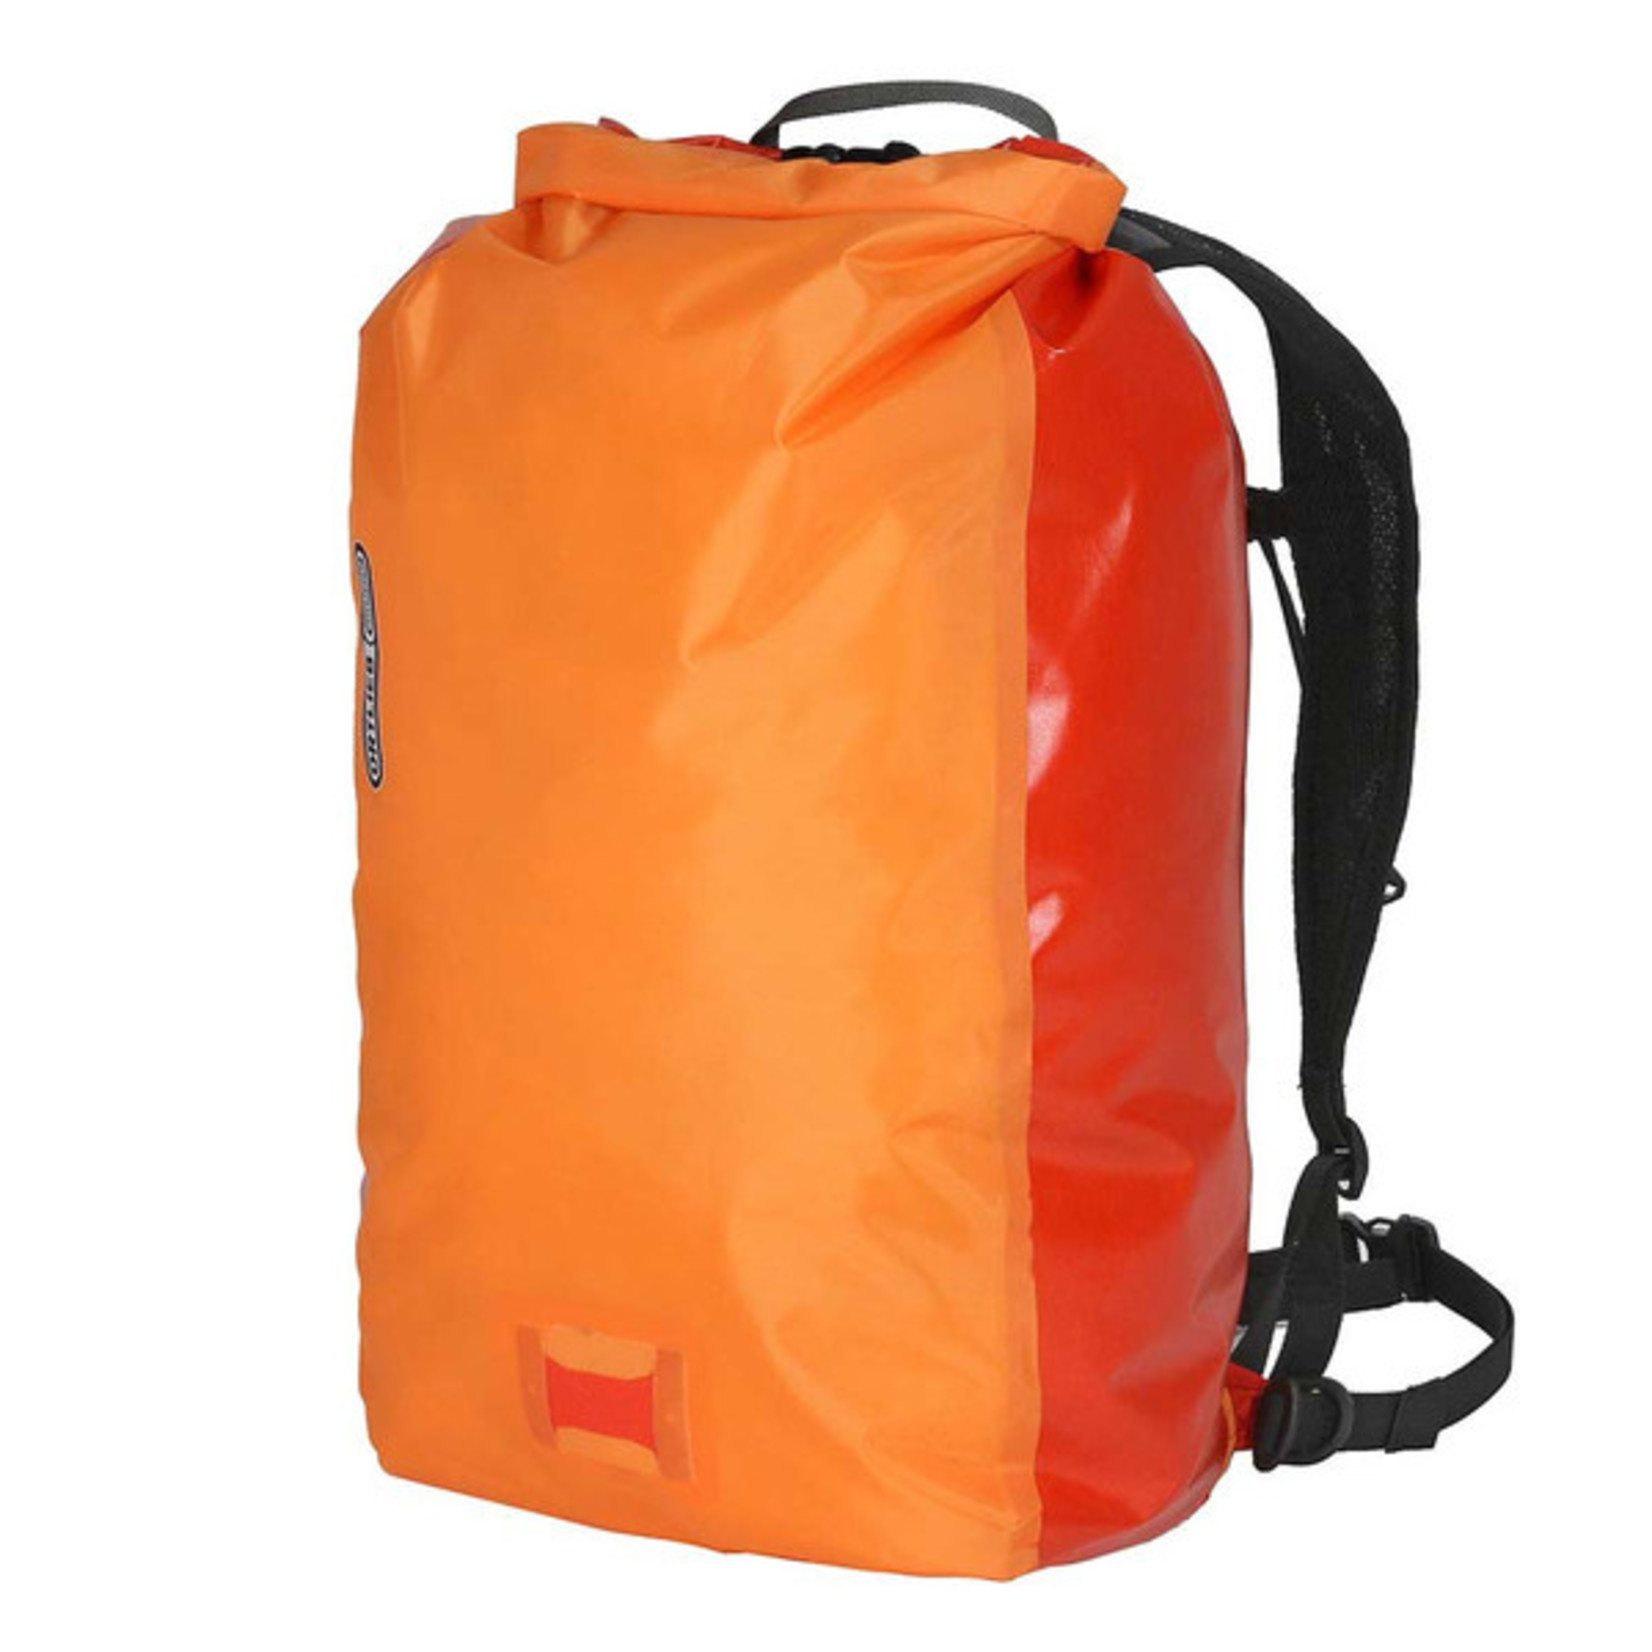 Ortlieb Ortlieb Light-Pack Backpack R6003 25L - Orange-Signal Red